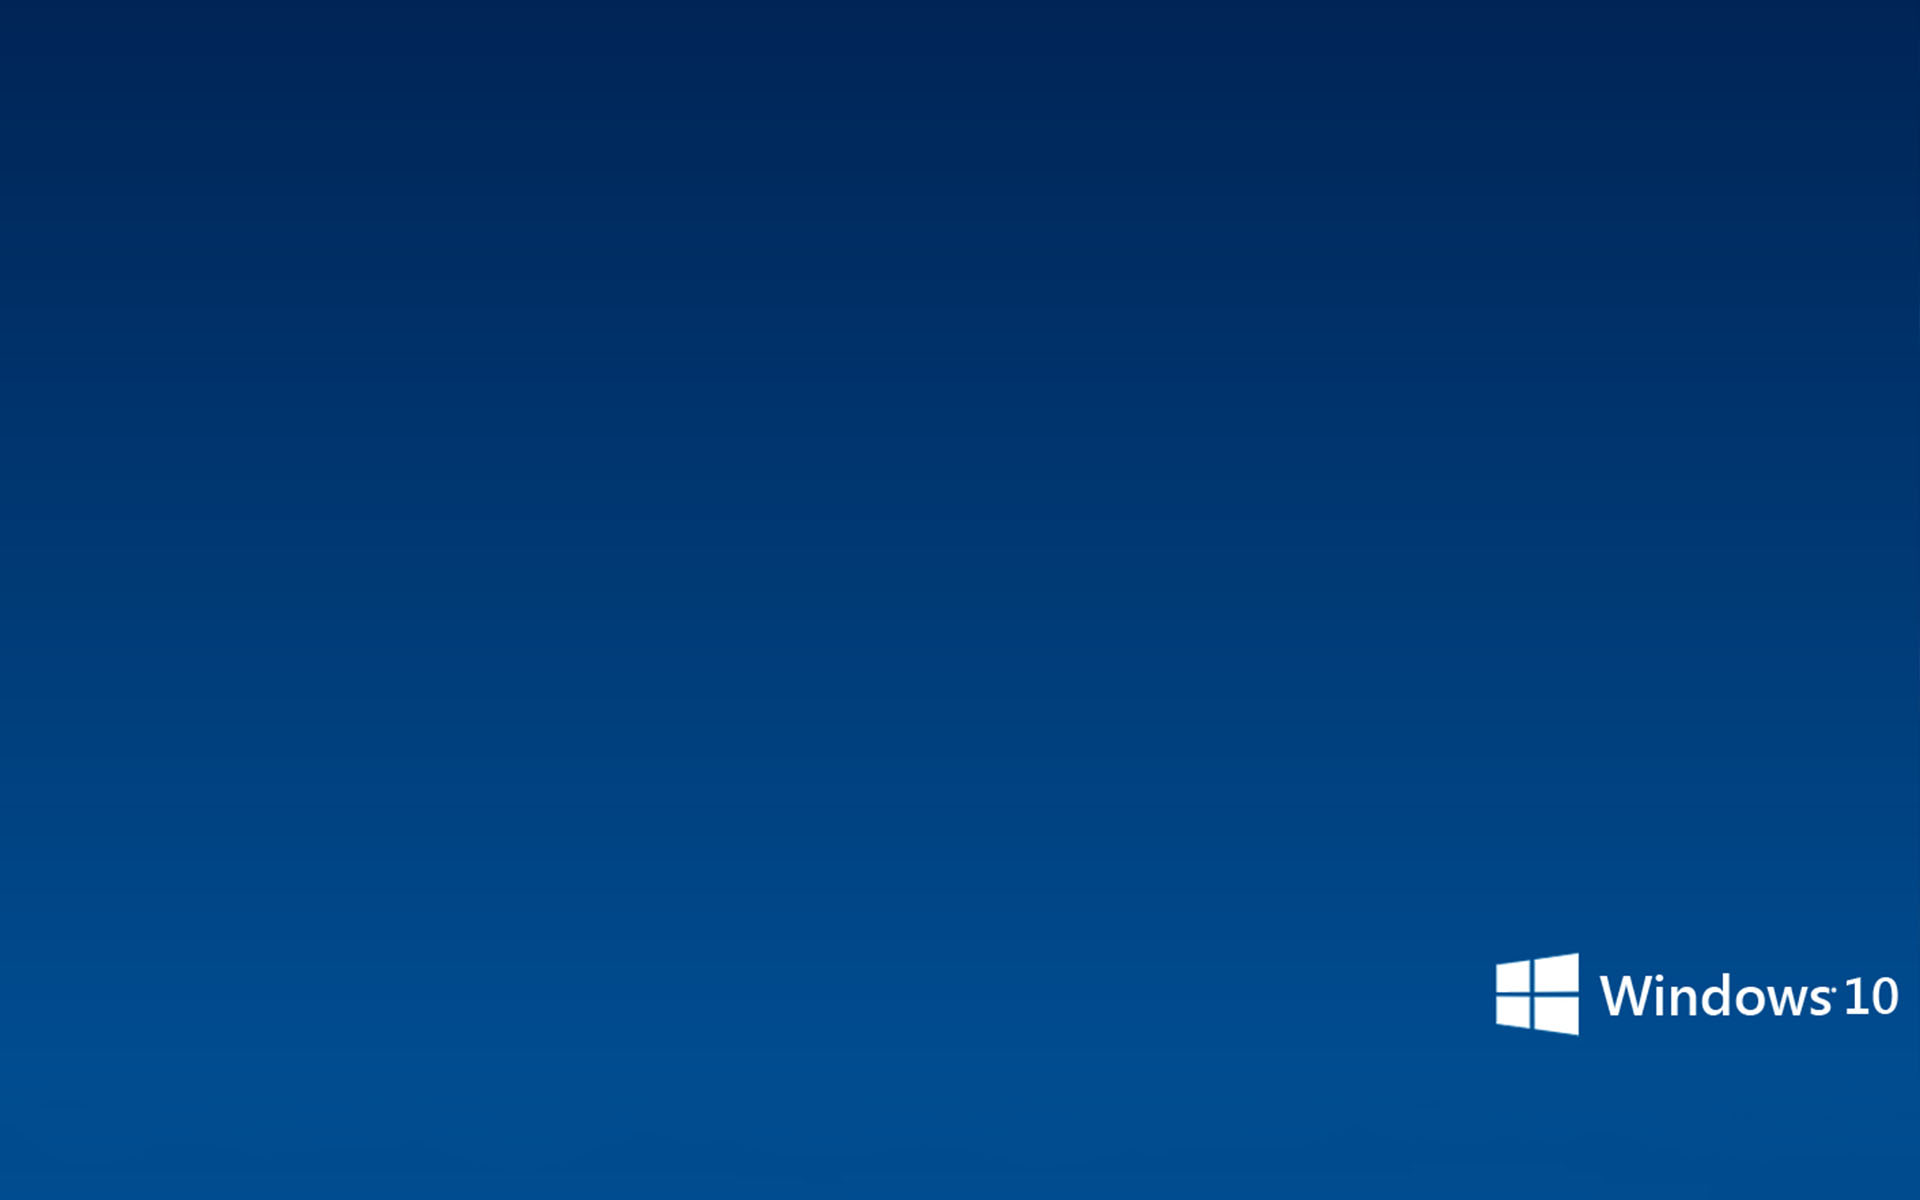 Simple Microsoft Windows Wallpaper